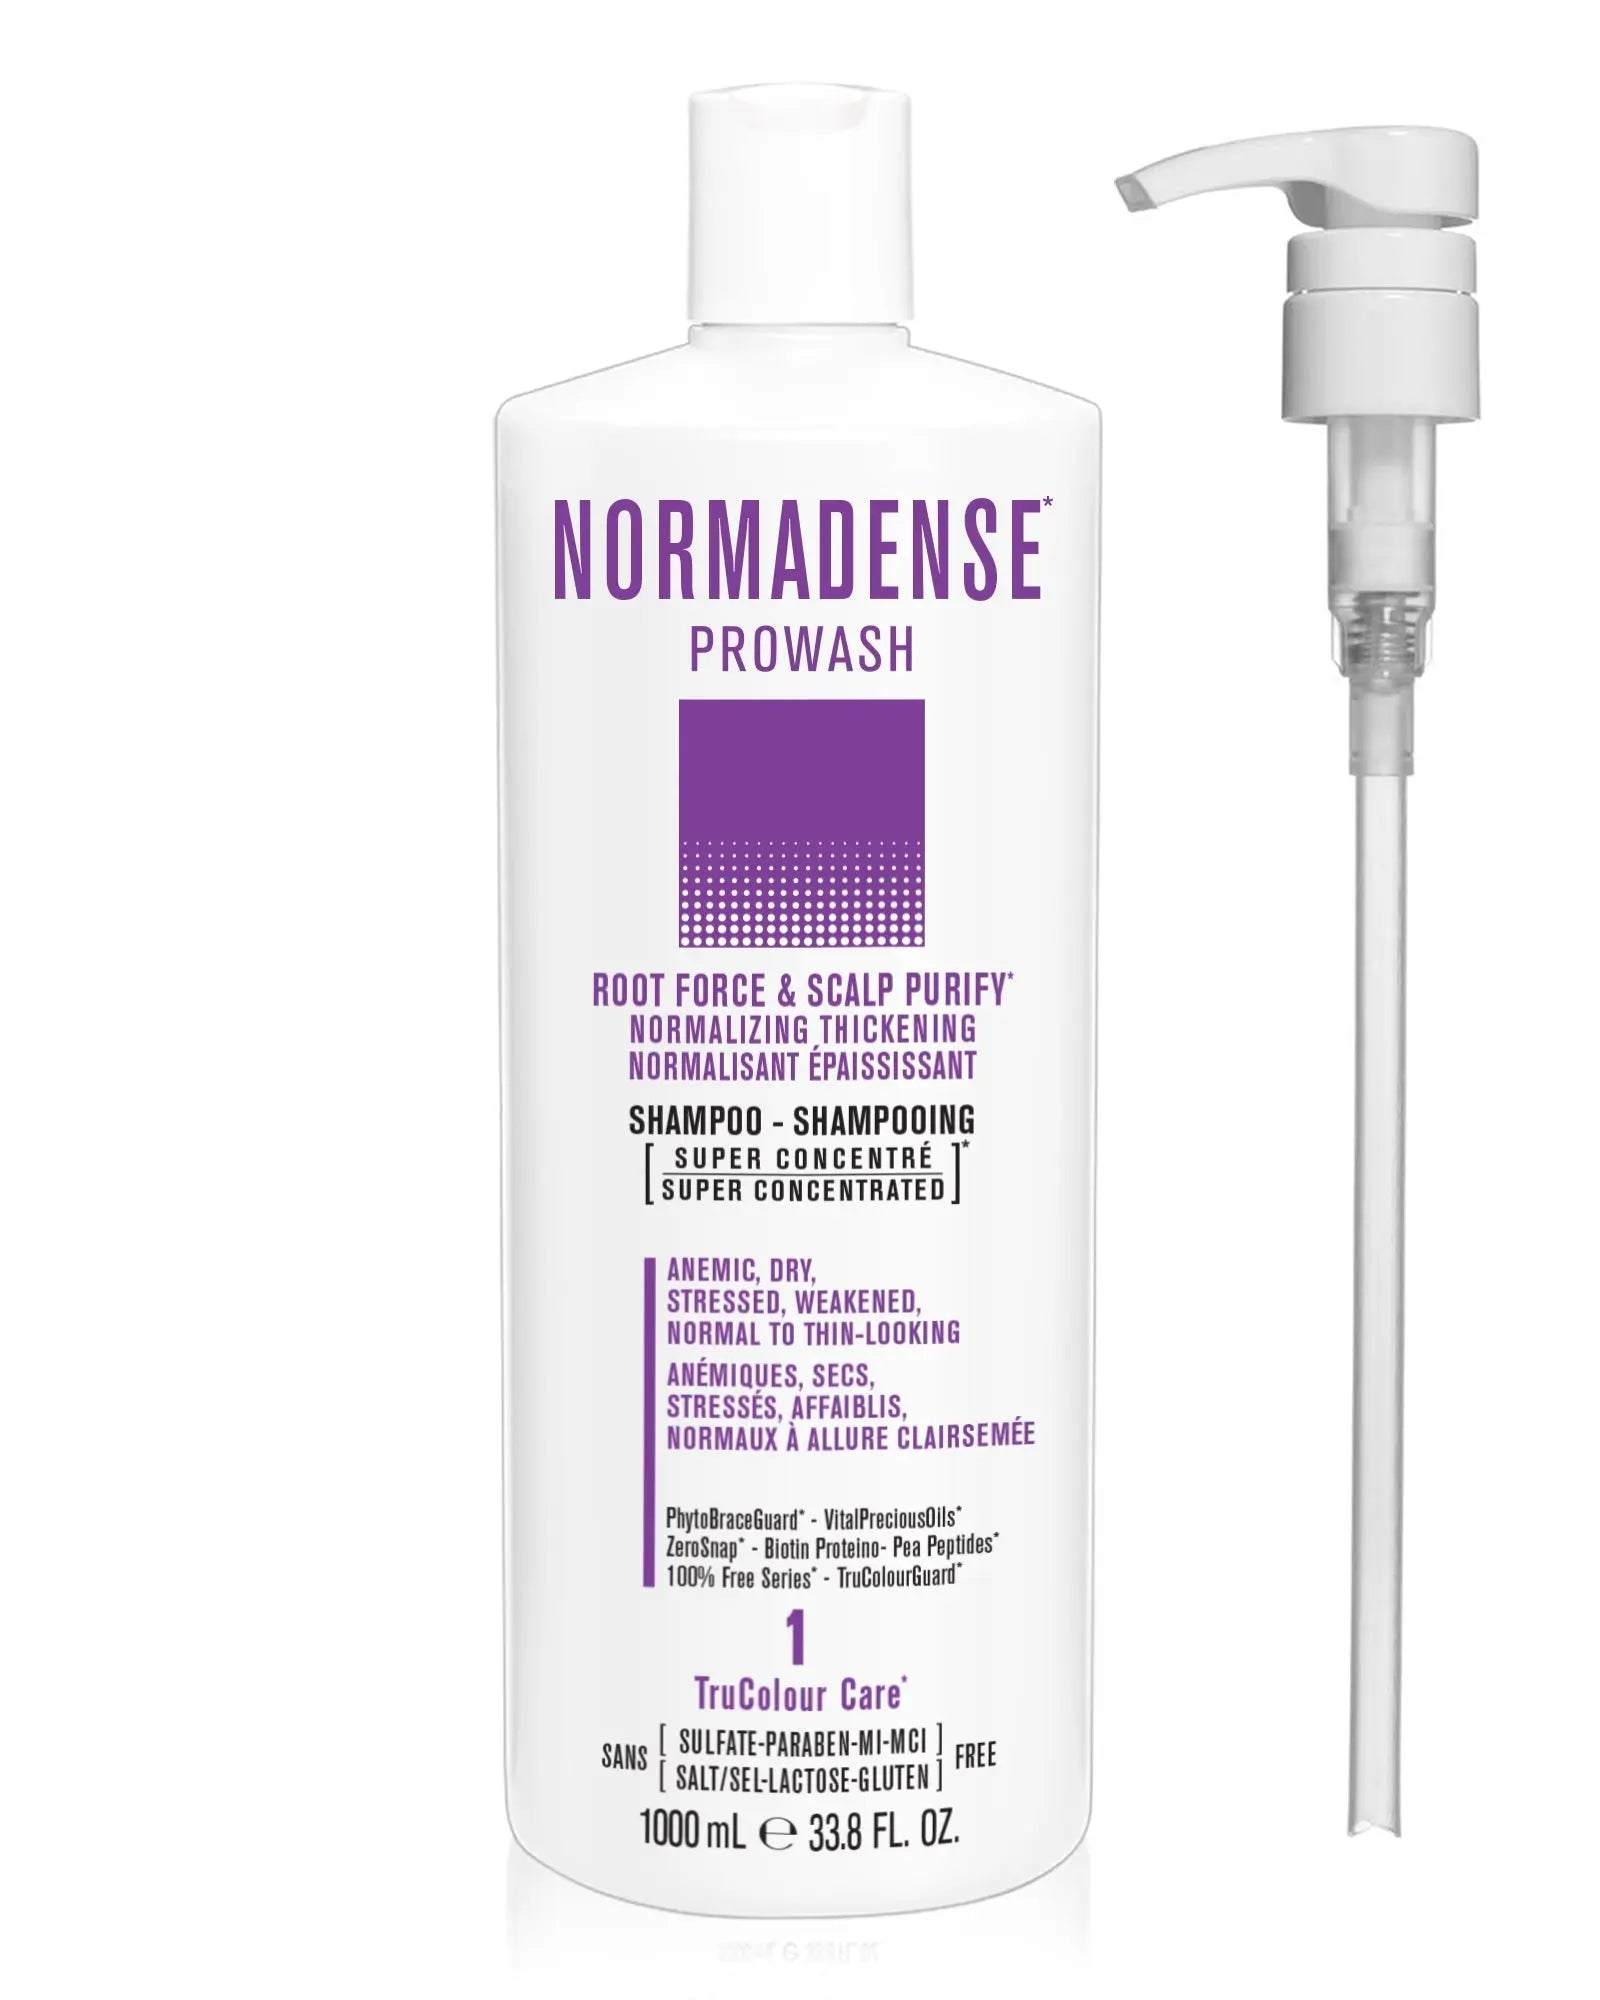 NORMADENSE 1 Prowash (shampoo) 1000 mL + Pump - SNOBGIRLS Canada